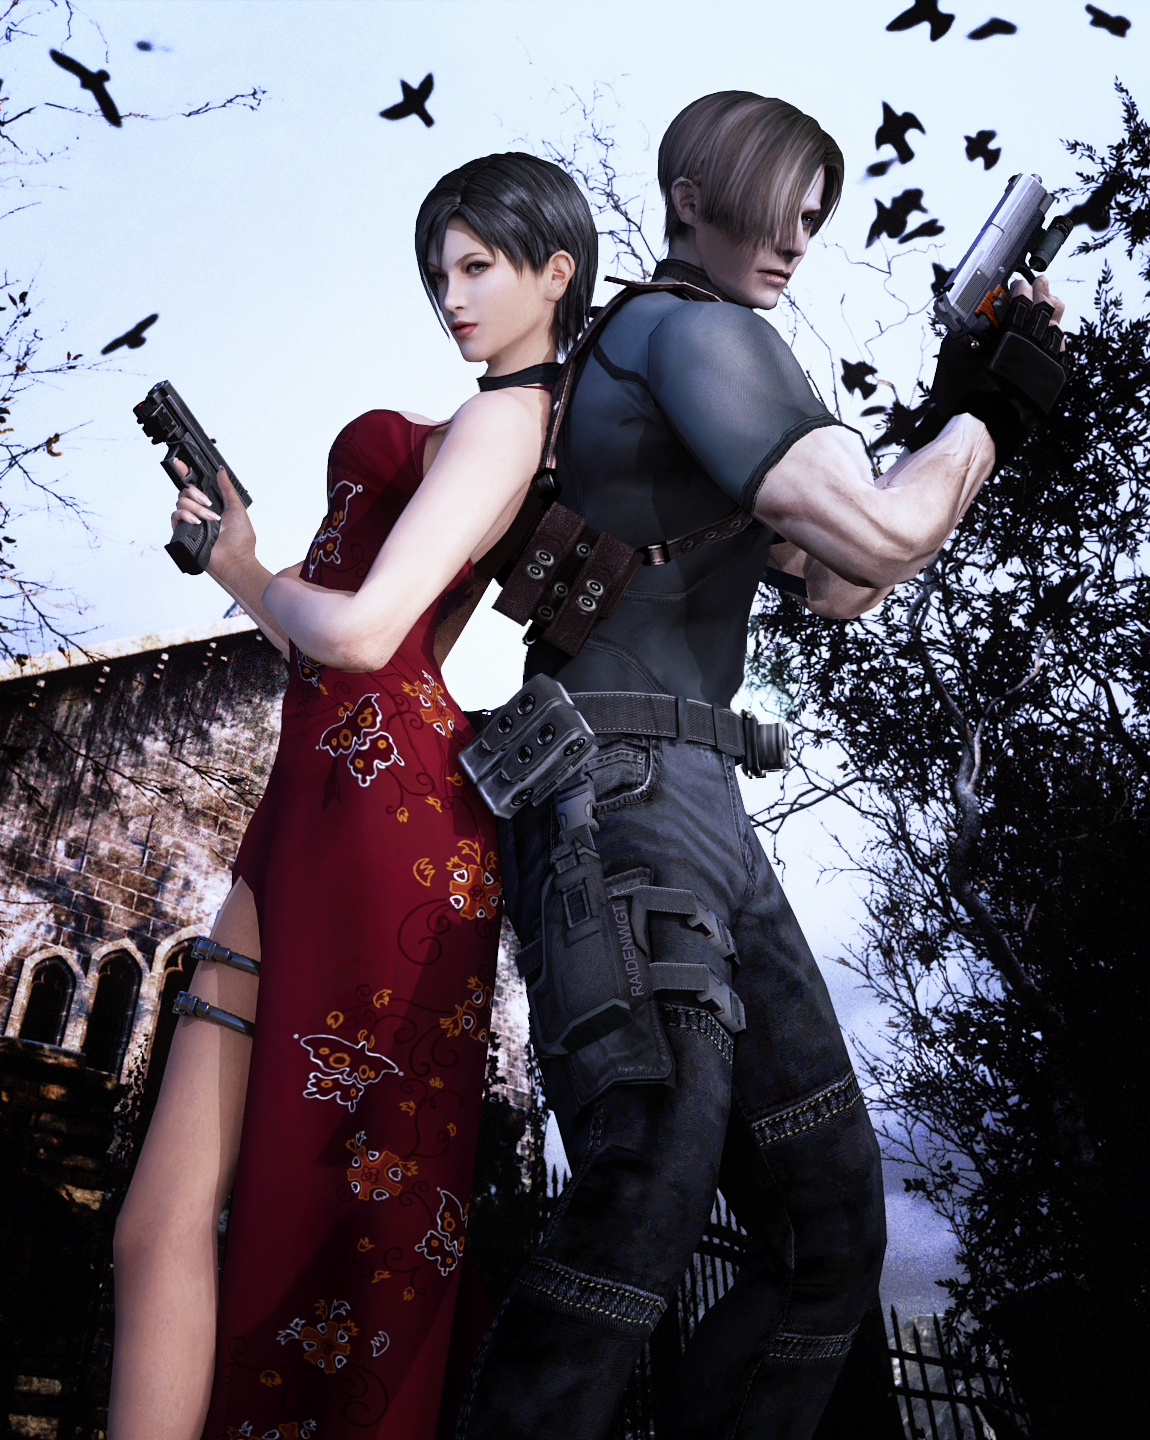 Ada Wong - Resident Evil 4 - Wallpaper by BetthinaRedfield on